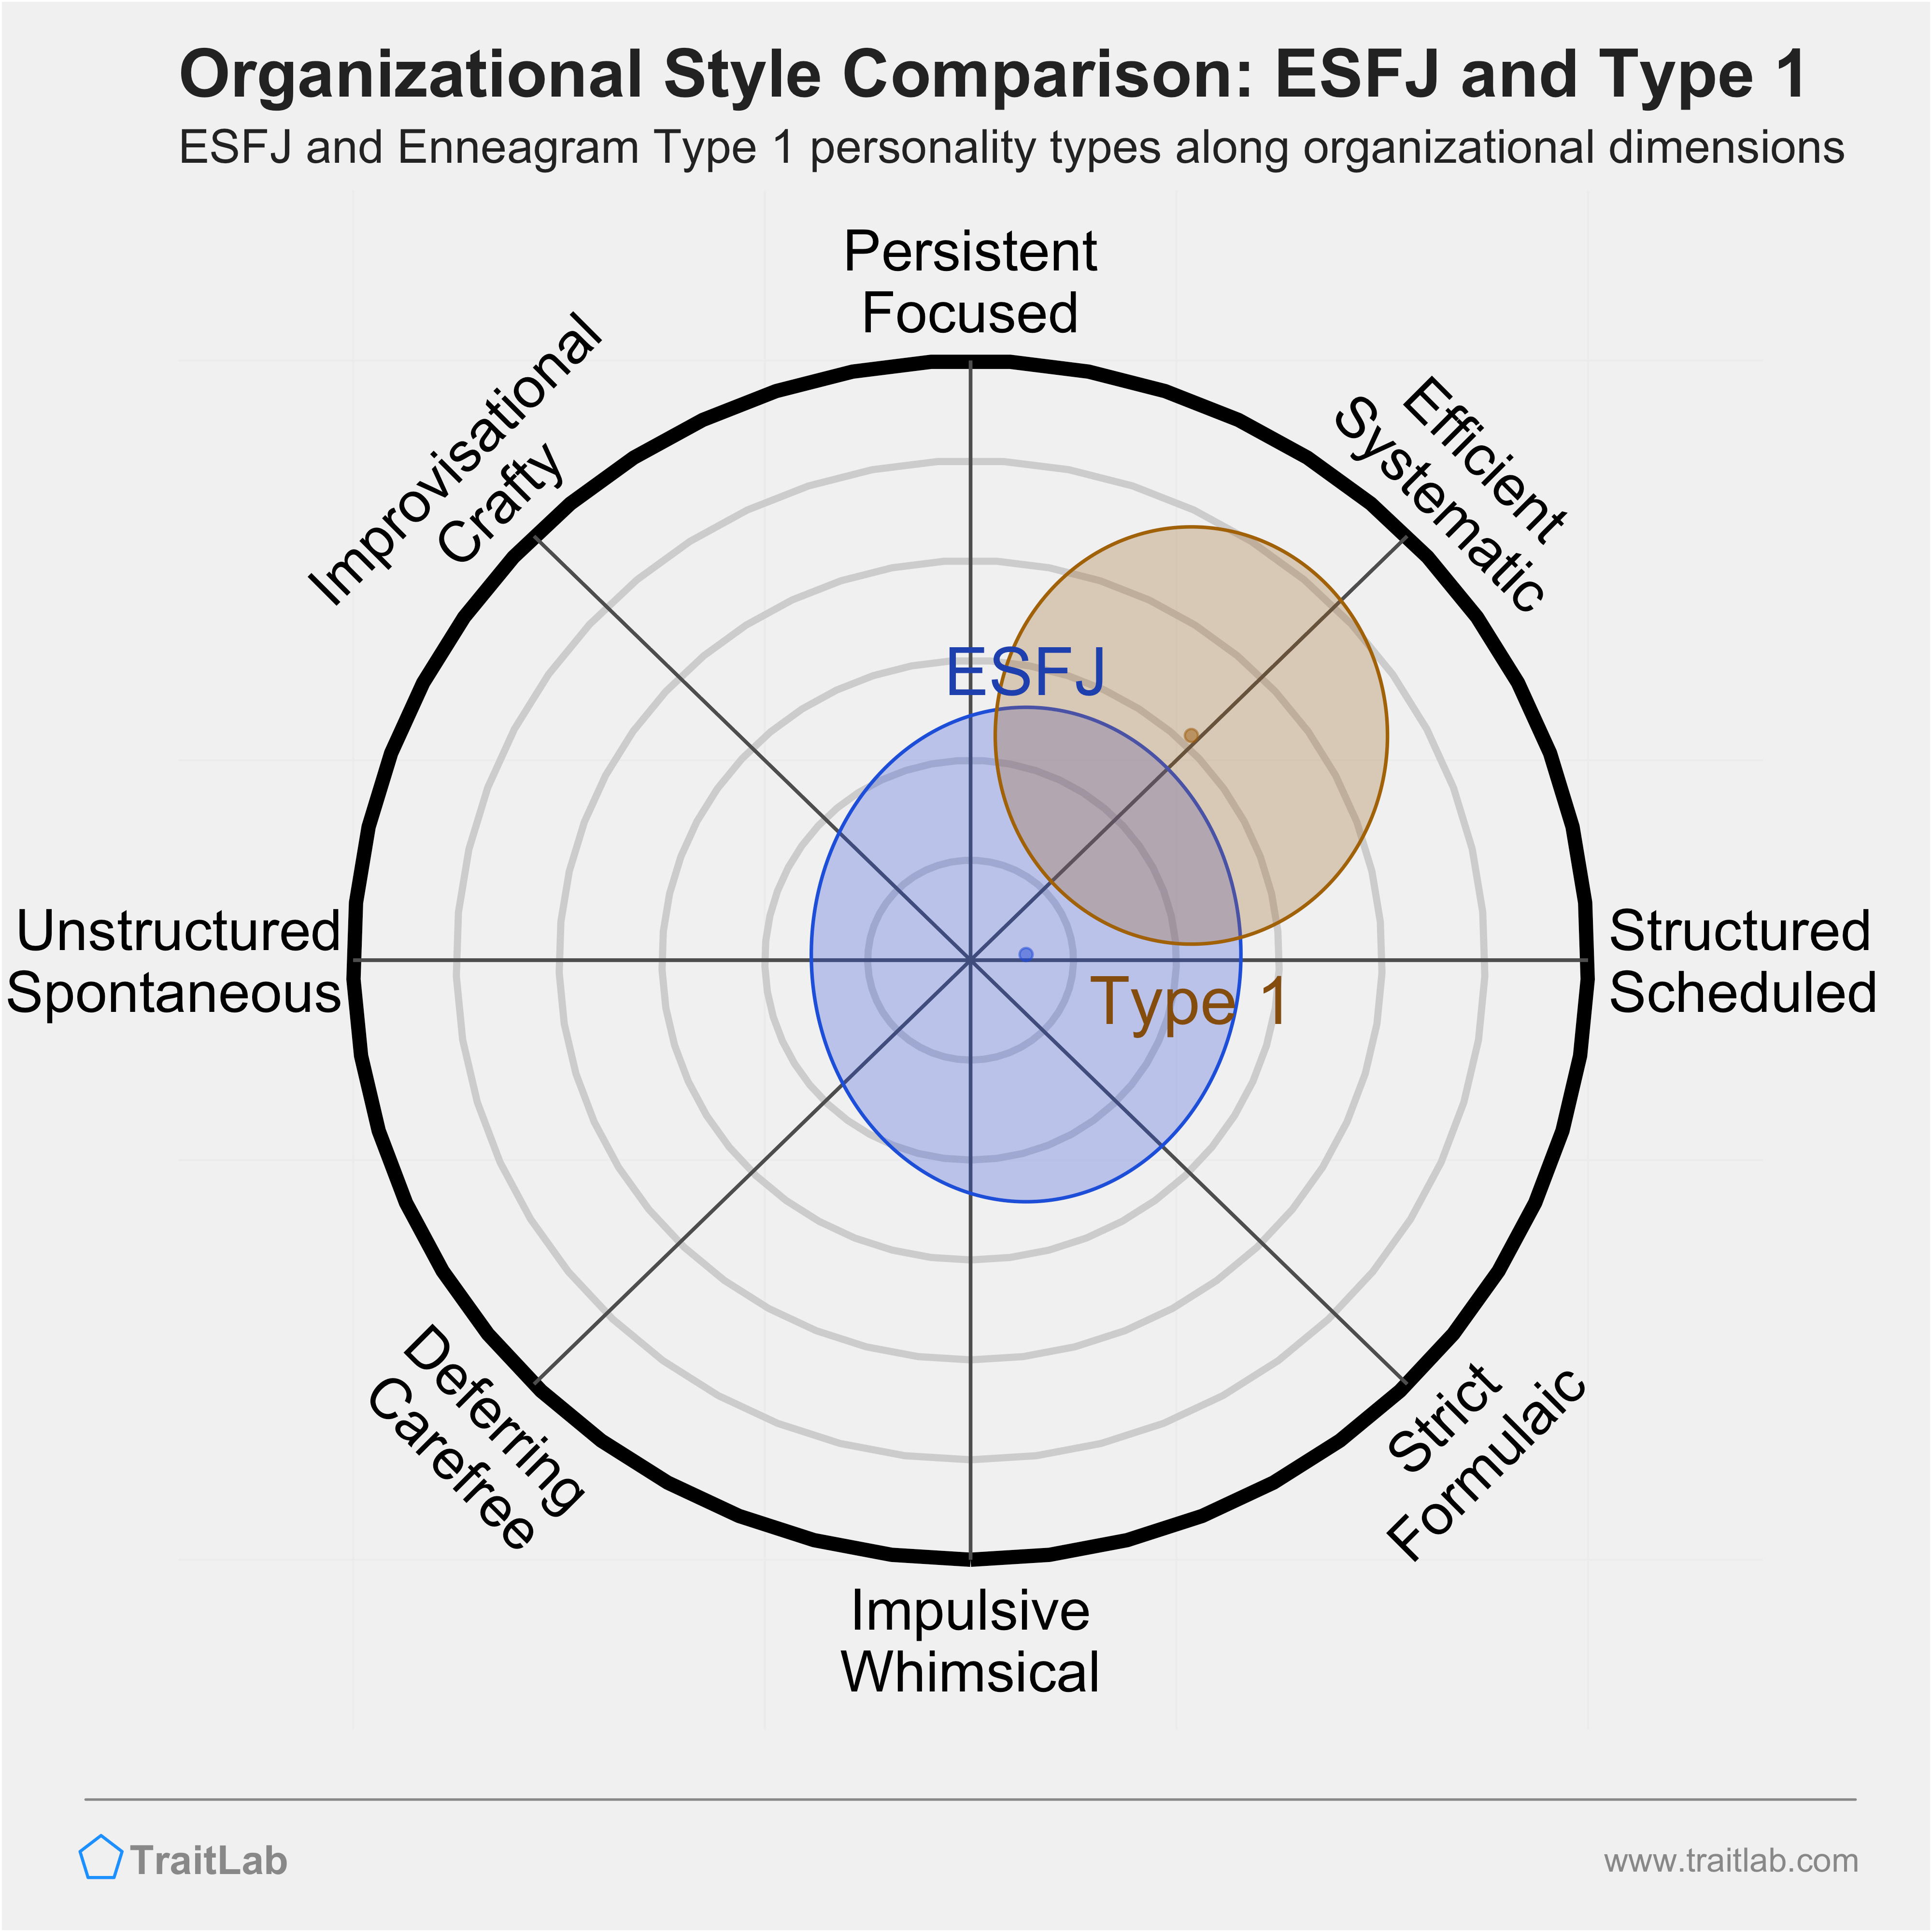 ESFJ and Type 1 comparison across organizational dimensions